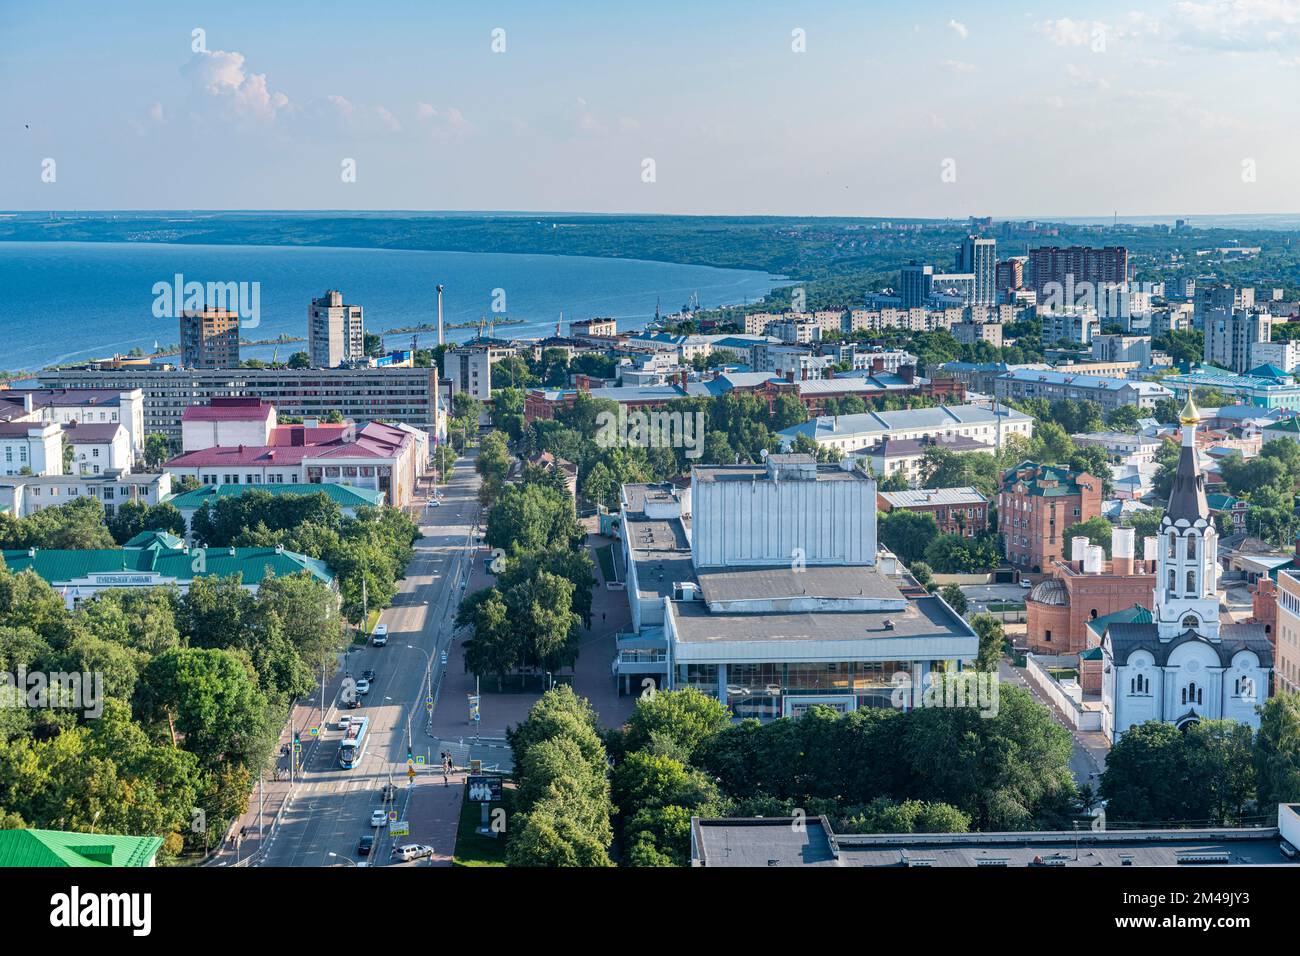 Overlook over Ulyanovsk and the Volga river, Ulyanovsk, Russia Stock Photo